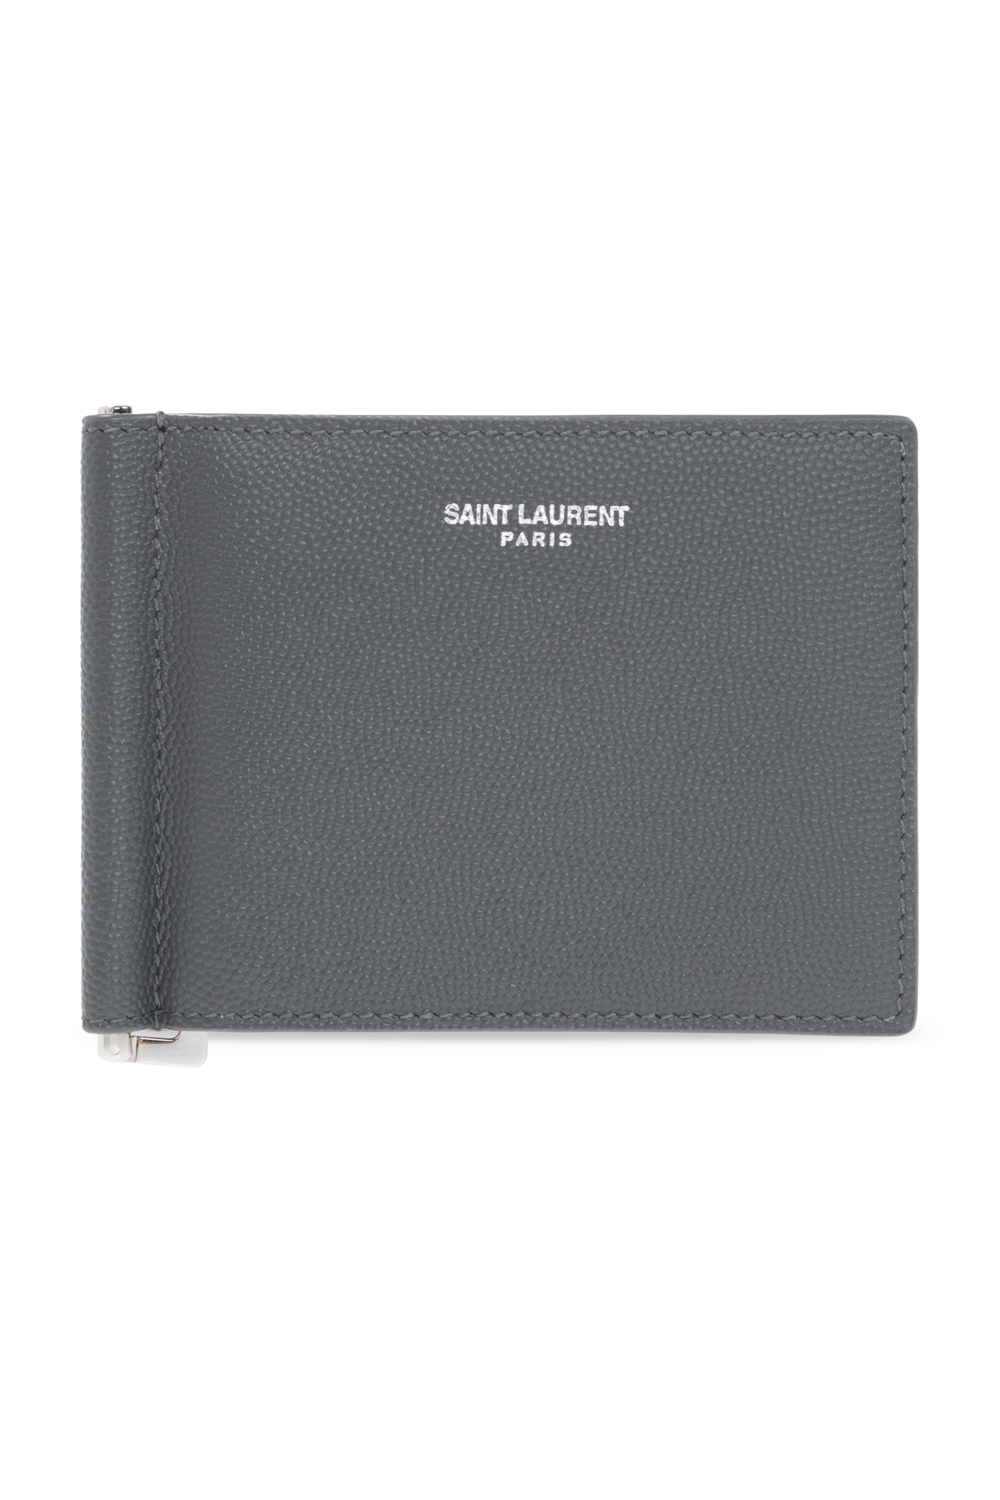 Saint Laurent Bill Clip Wallet in Grain de Poudre-Embossed Leather - Grey - Men